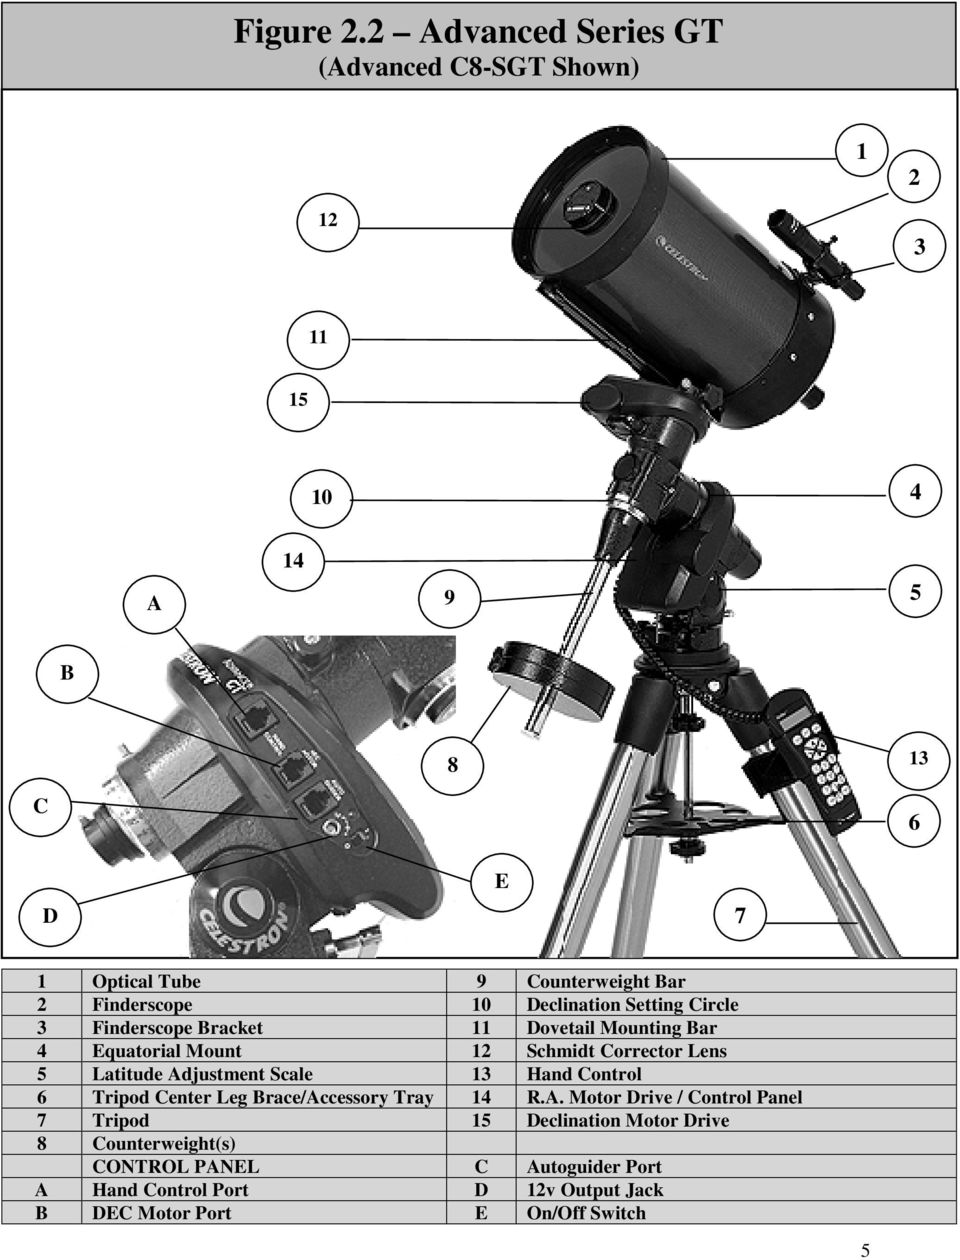 Finderscope 10 Declination Setting Circle 3 Finderscope Bracket 11 Dovetail Mounting Bar 4 Equatorial Mount 12 Schmidt Corrector Lens 5